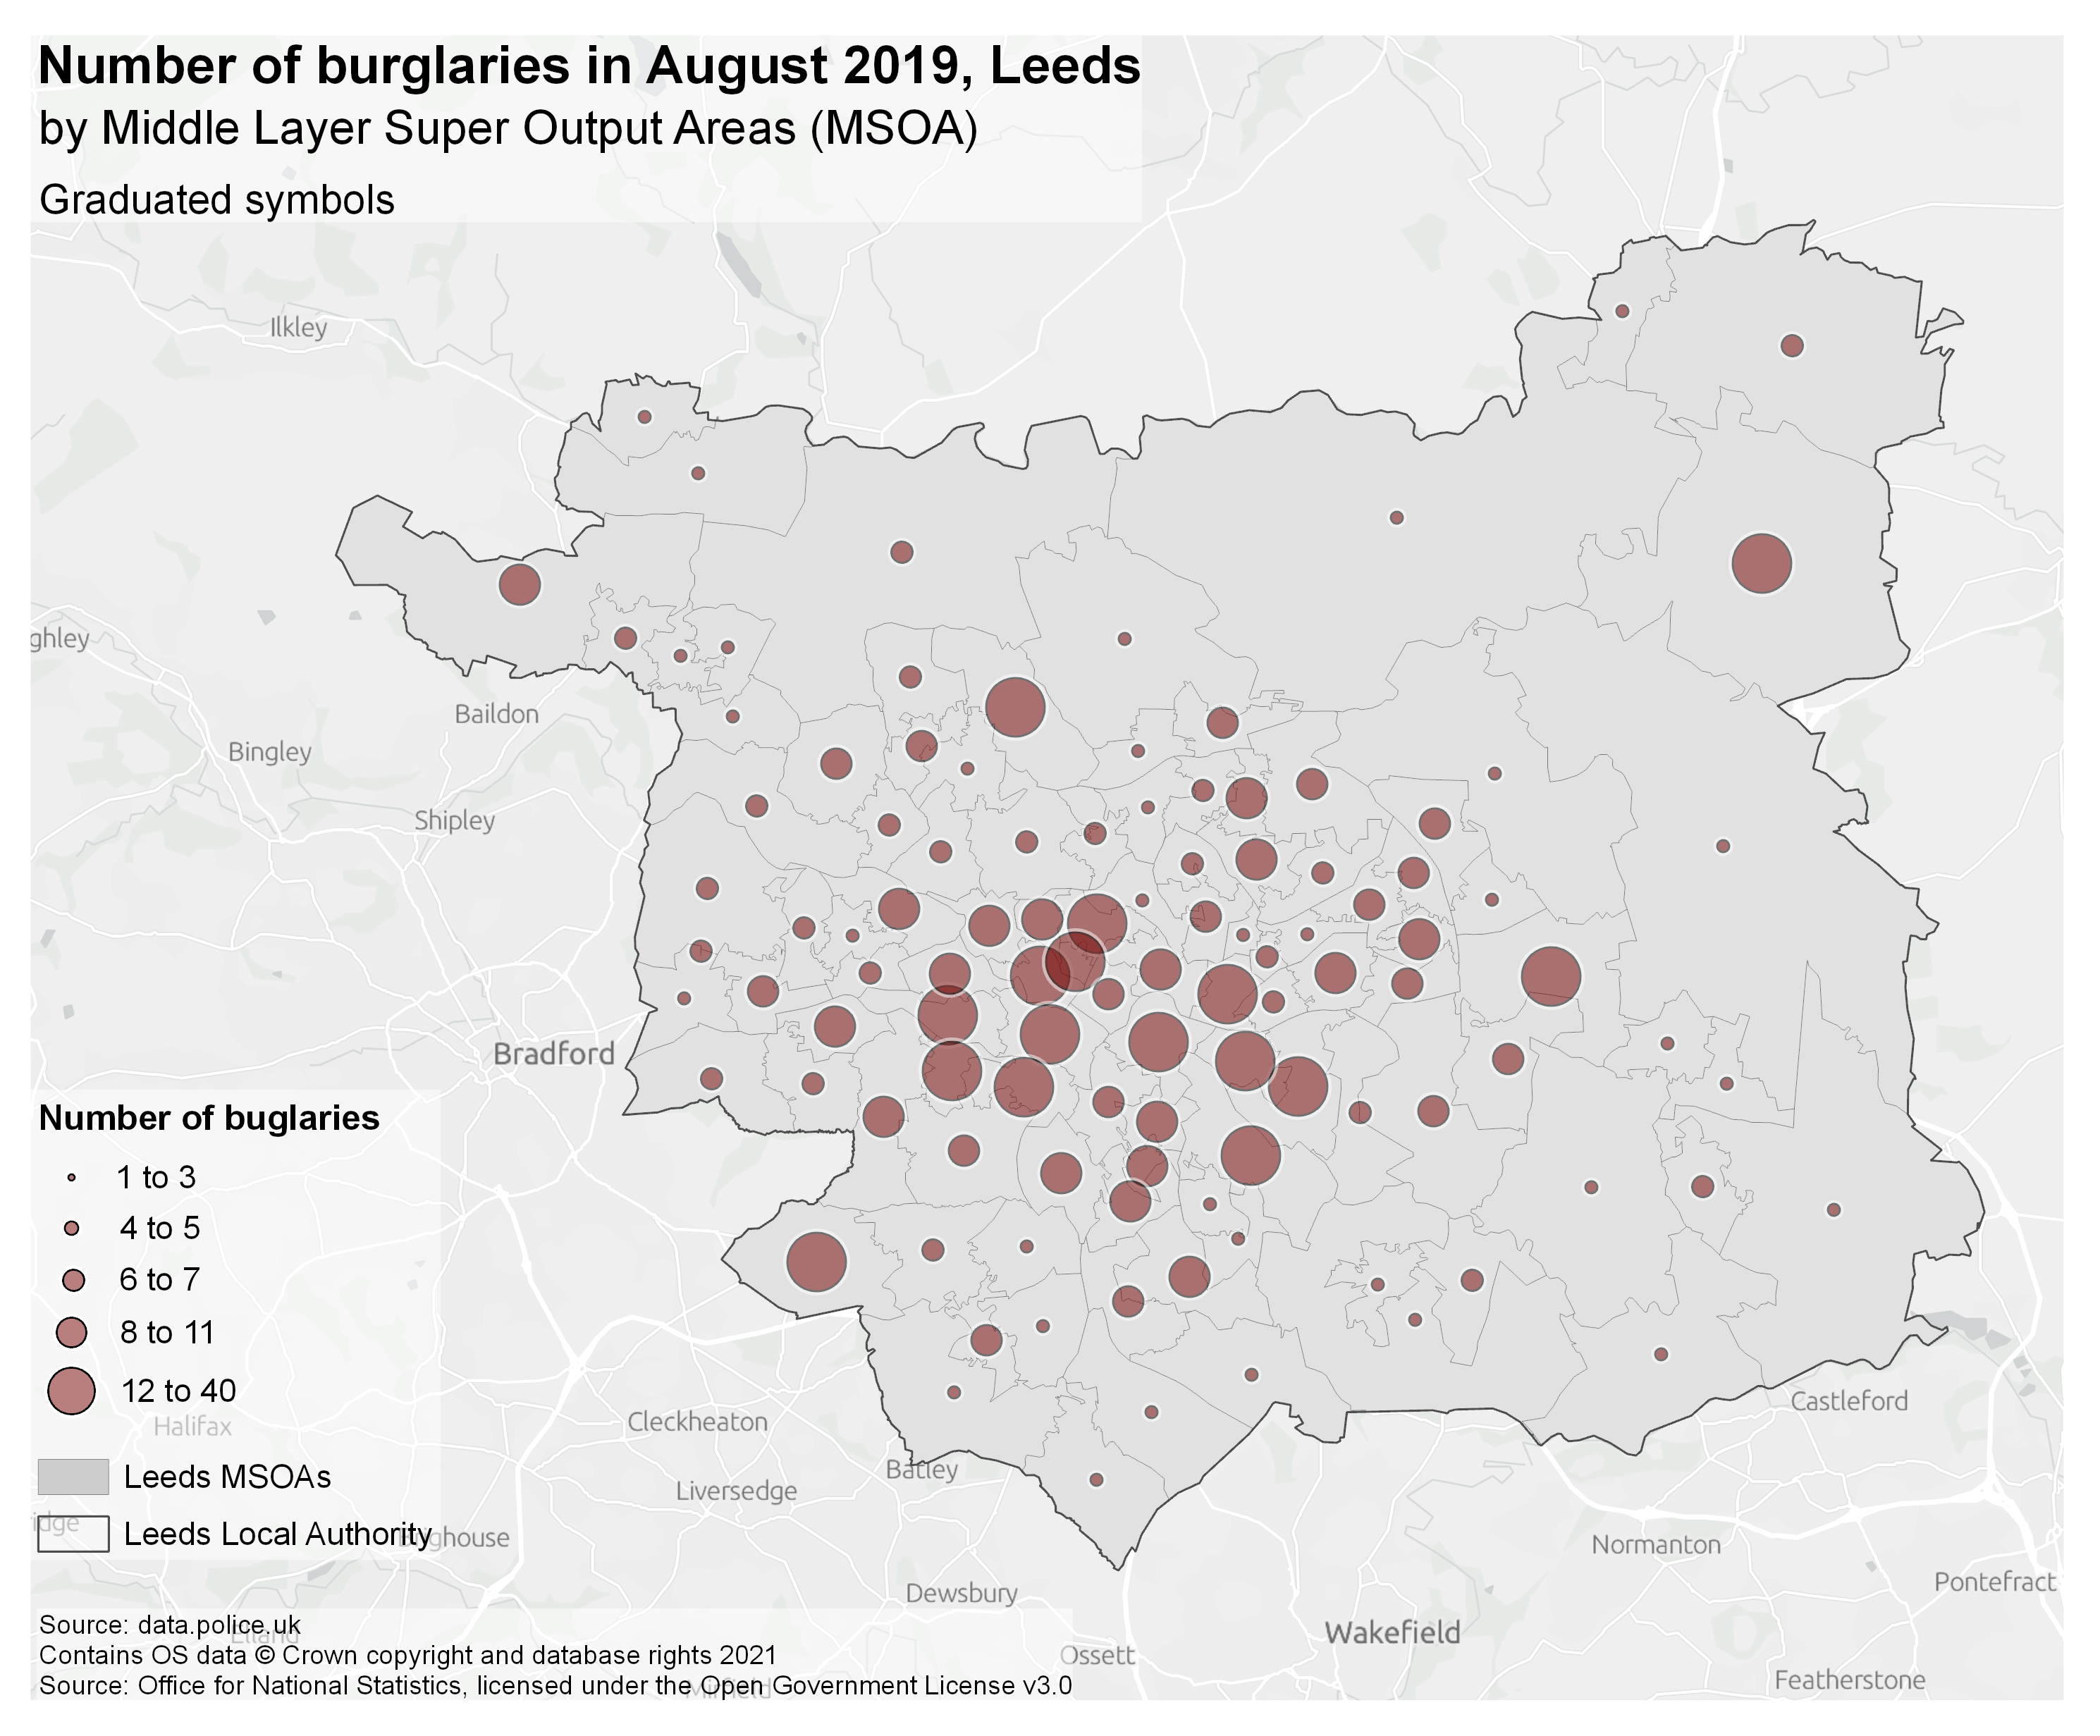 A graduated symbol map of burglary rates in London MSOAs